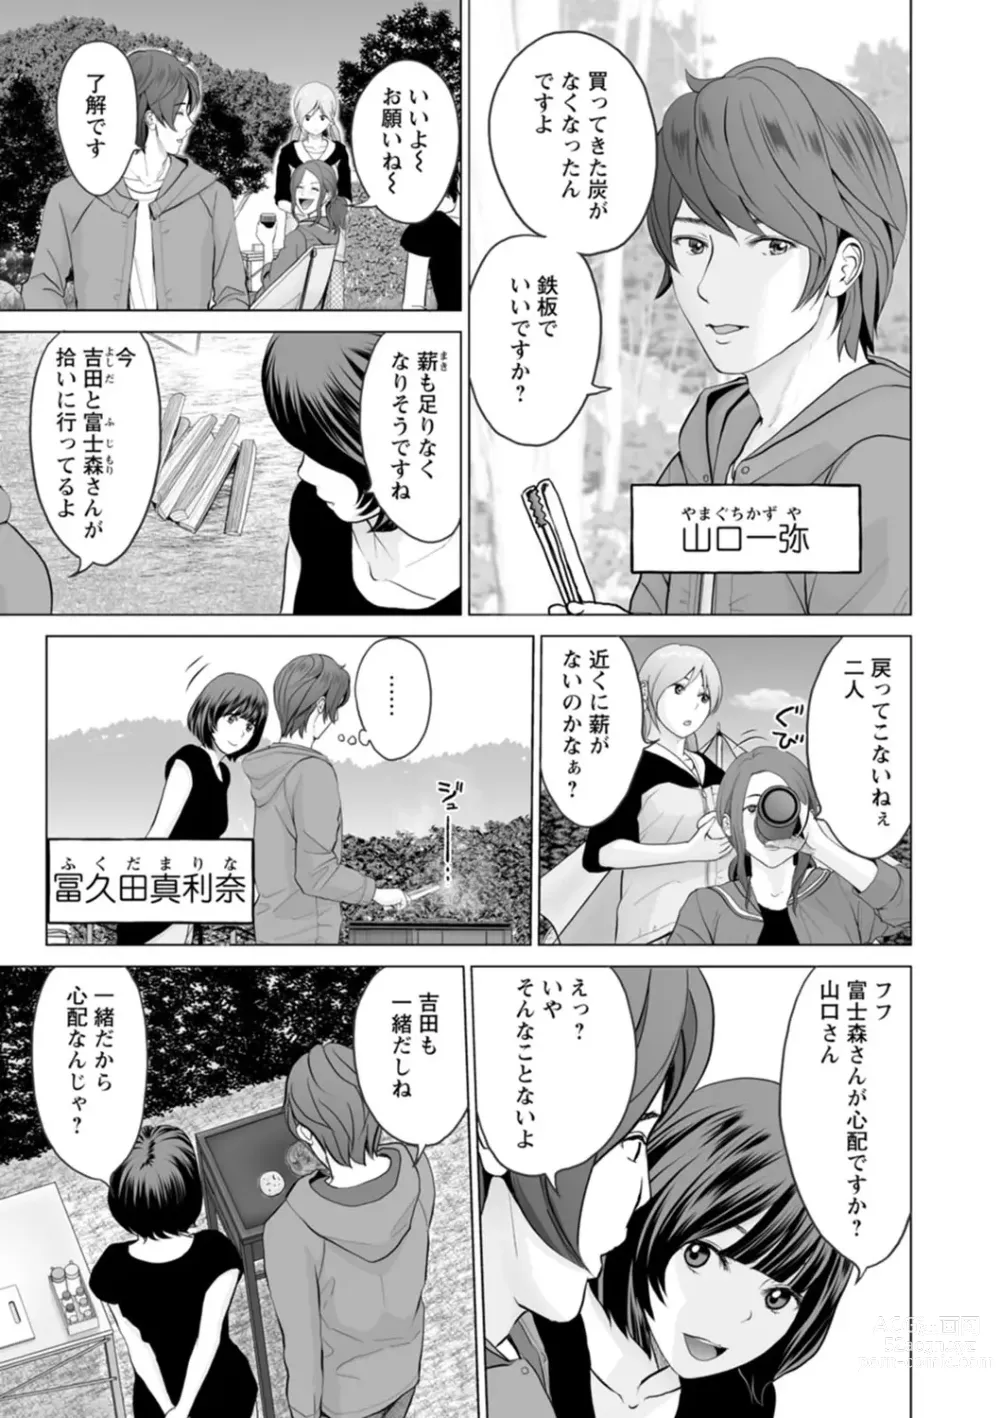 Page 9 of manga Fujun Group Kouyuu - Impure Group Dating